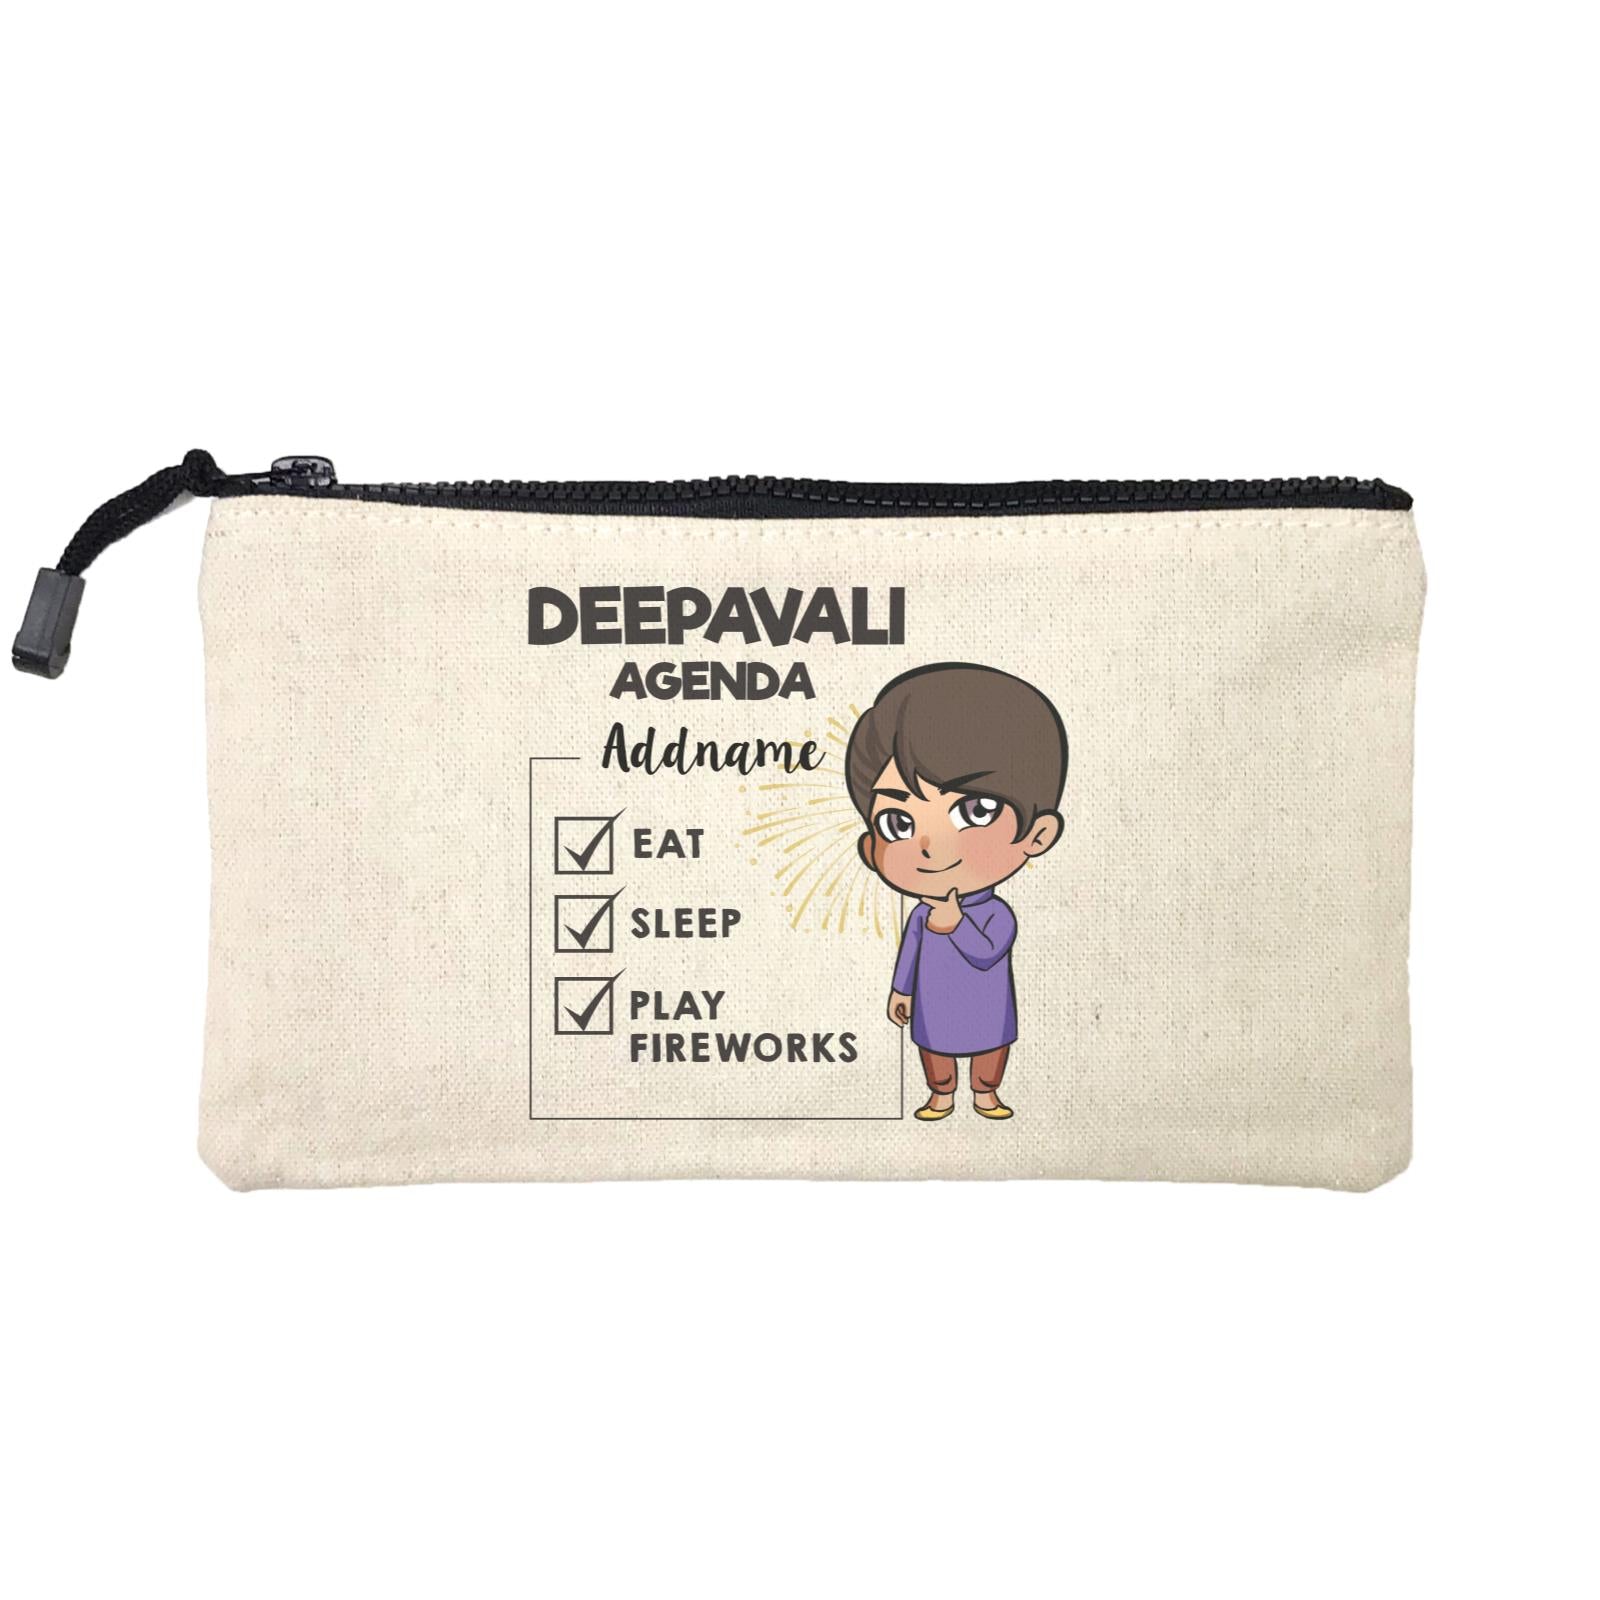 Deepavali Chibi Little Boy Agenda Addname Mini Accessories Stationery Pouch